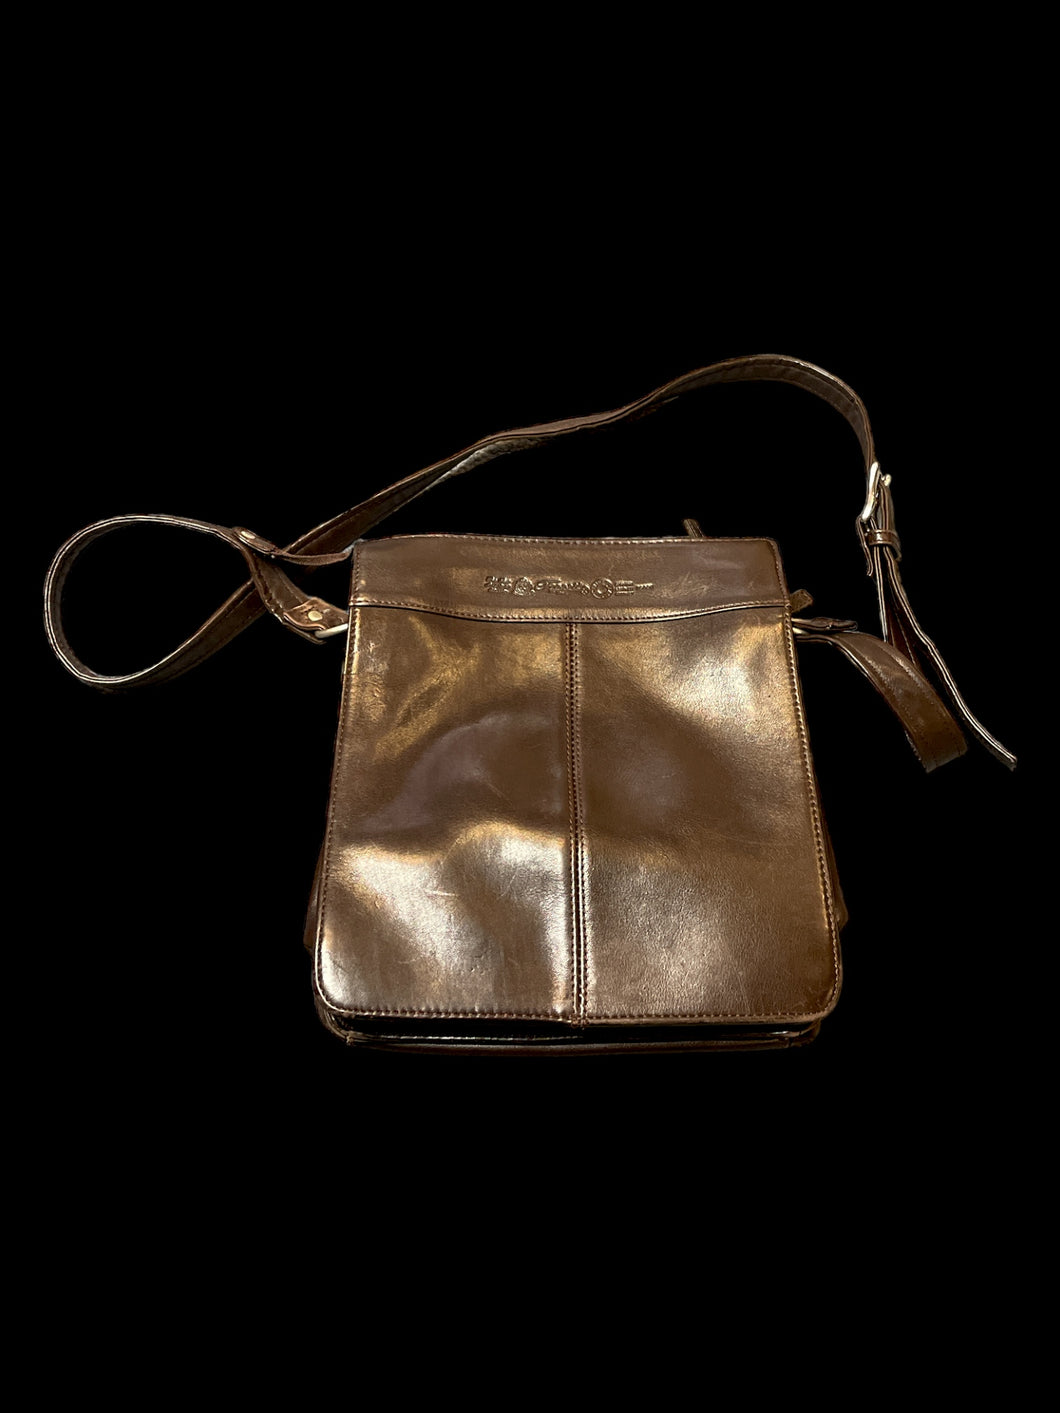 Rich brown leather crossbody bag w/ silver-like hardware, buckle adjustable strap, zipper pockets, & inner pockets